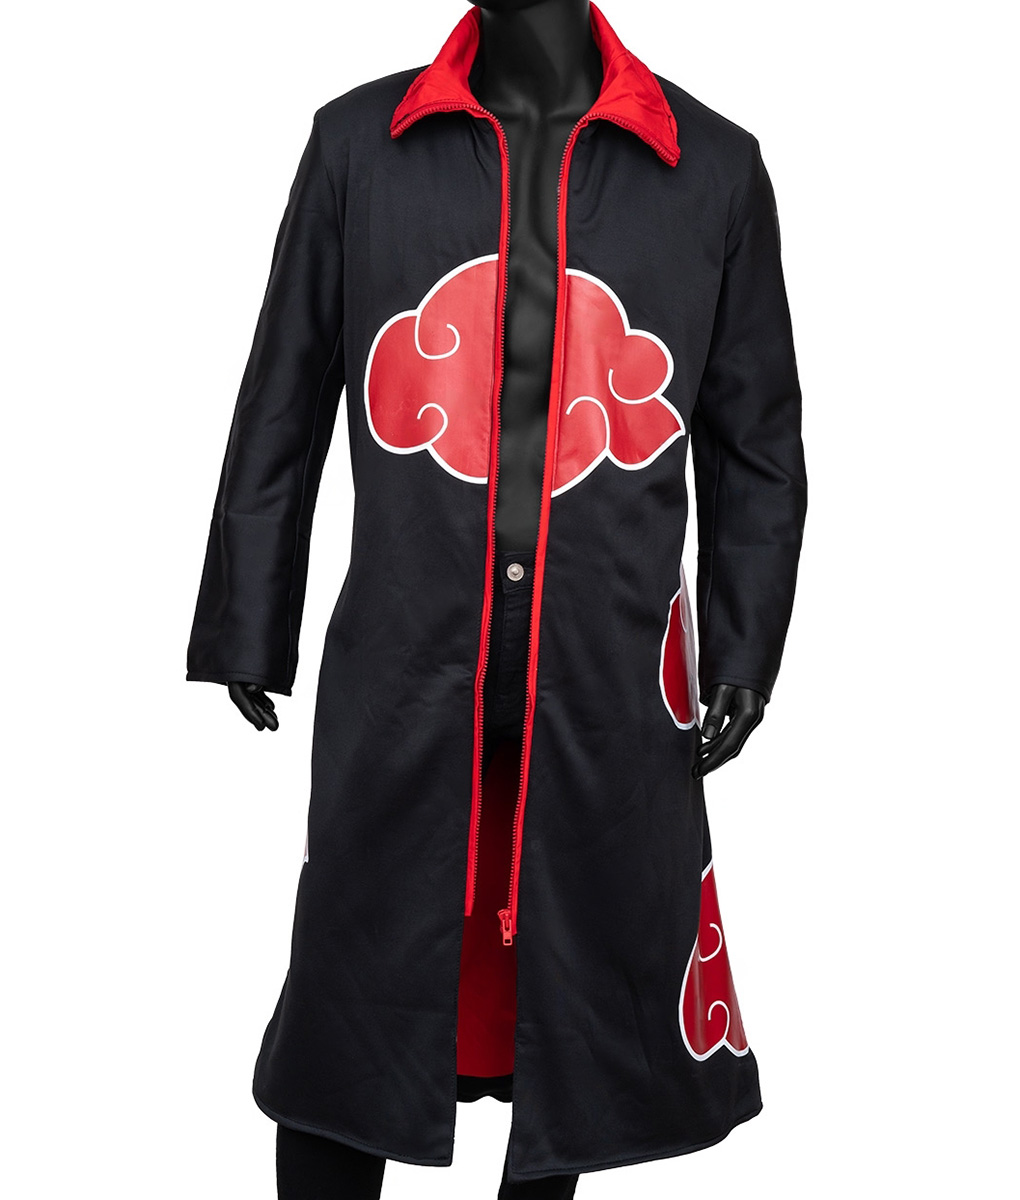 Naruto Akatsuki Cloak Coat